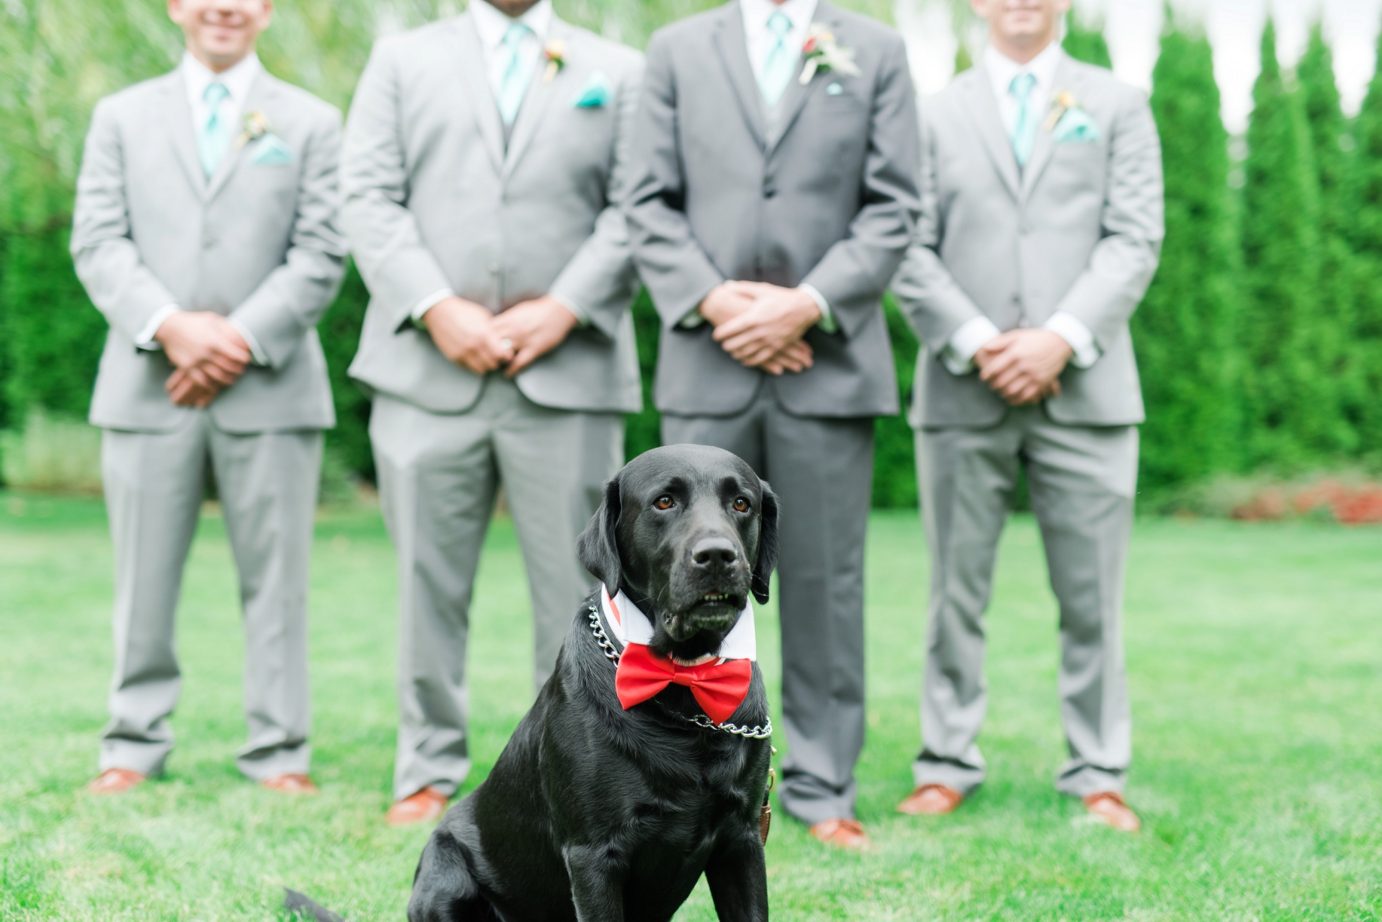 promise garden groom and groomsmen with dog photo